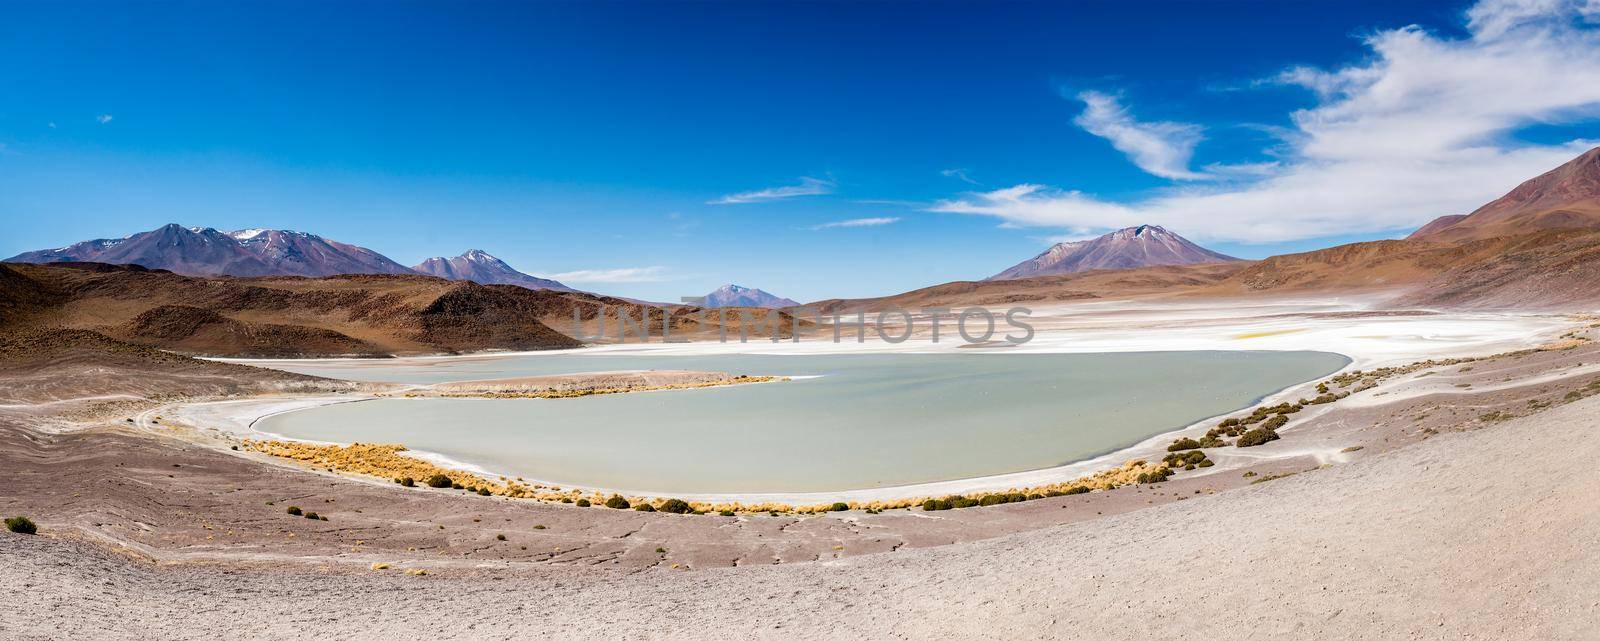 Mountanious lagoon in Bolivia by tan4ikk1